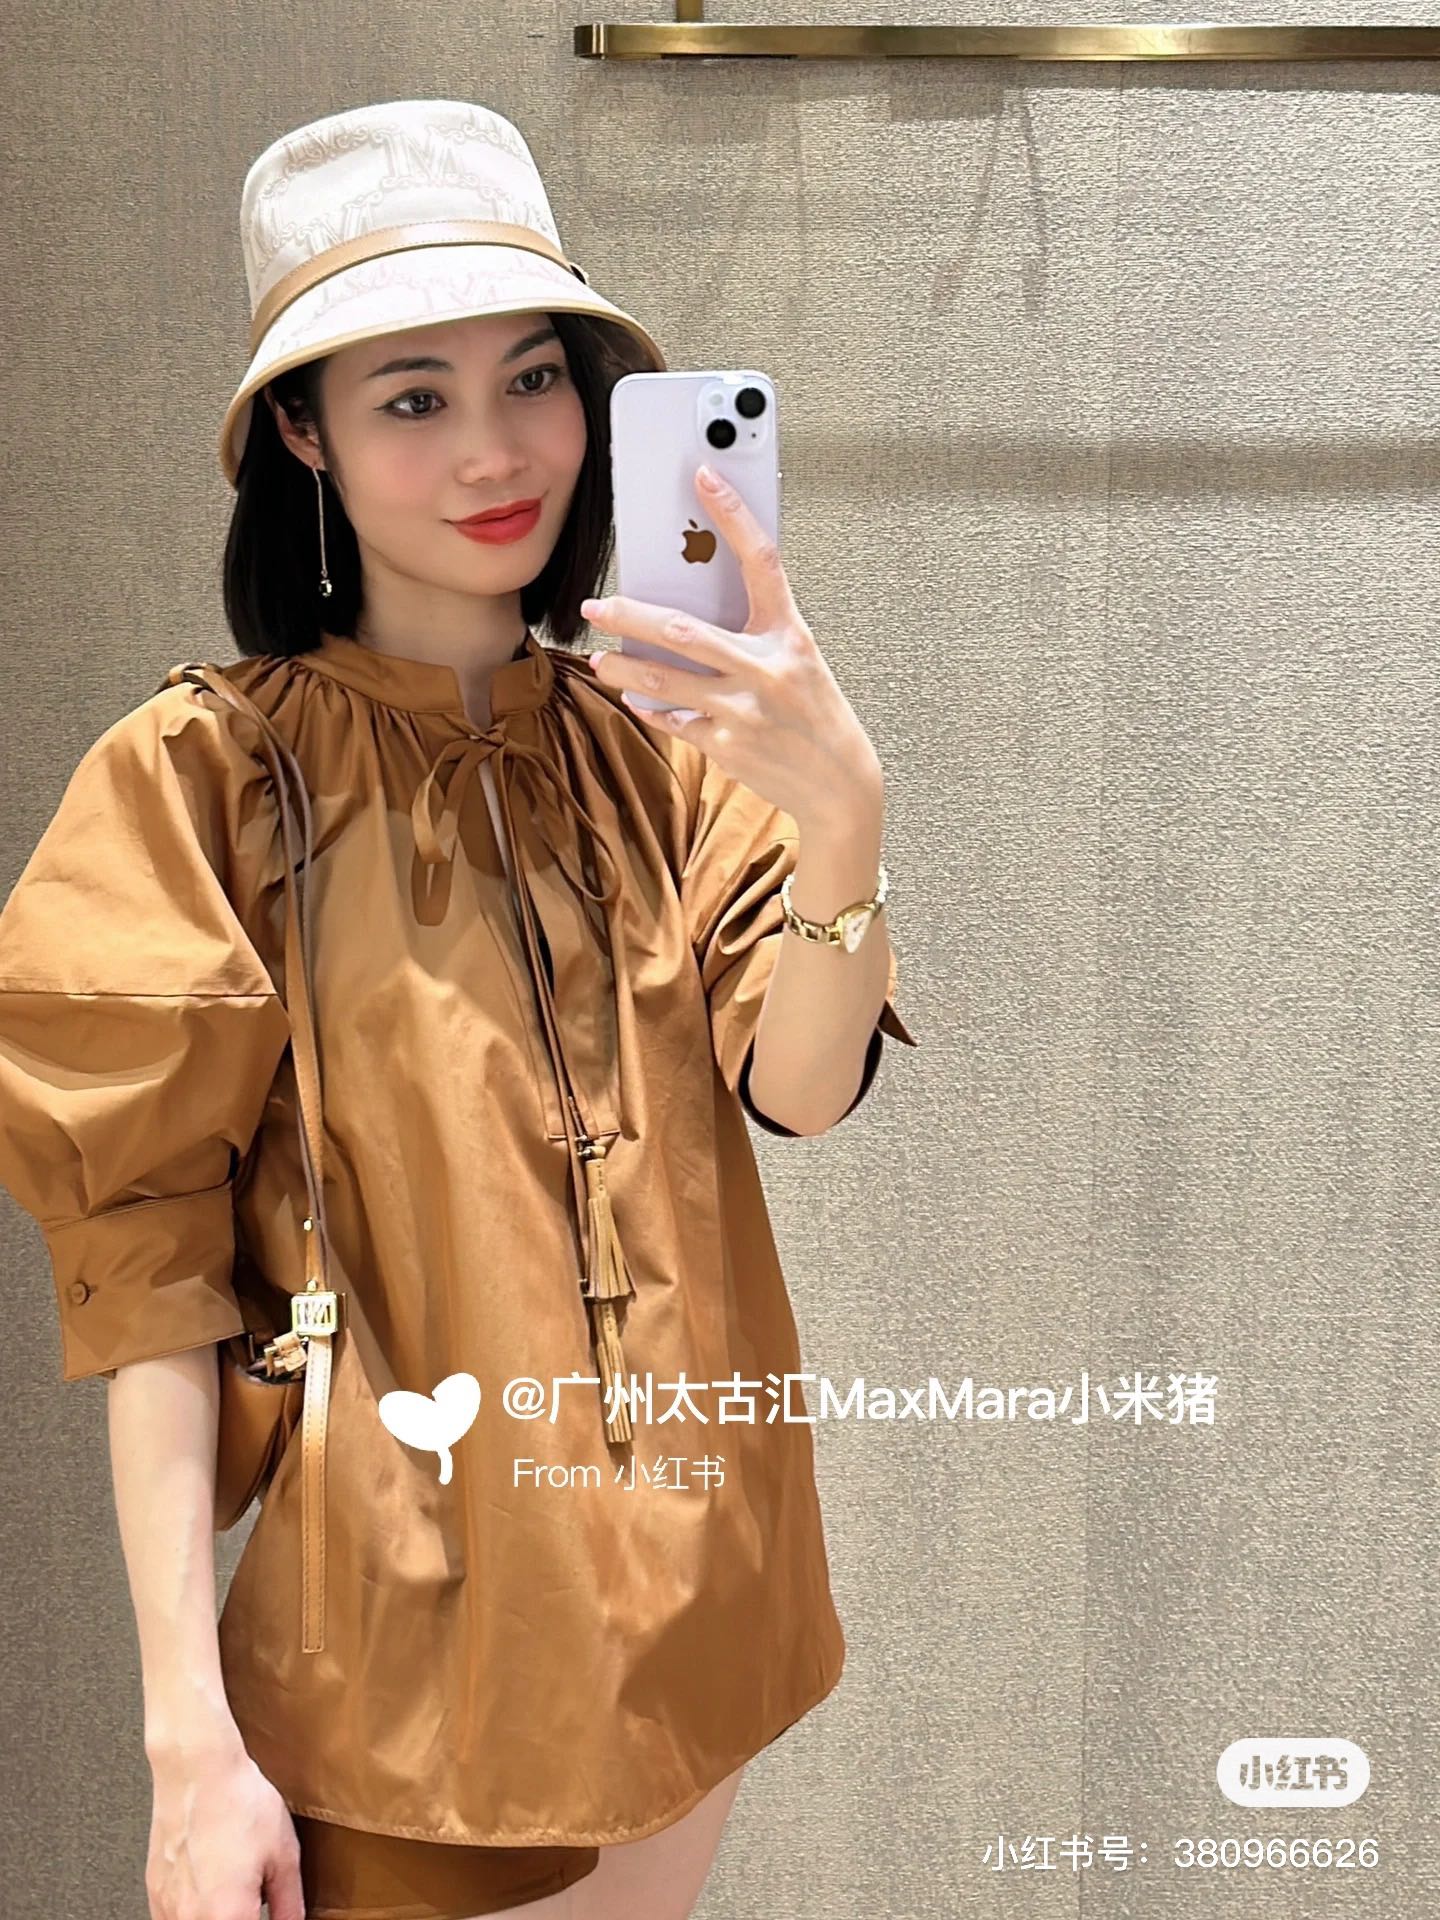 MaxMara Clothing Shirts & Blouses Caramel White Spring/Summer Collection